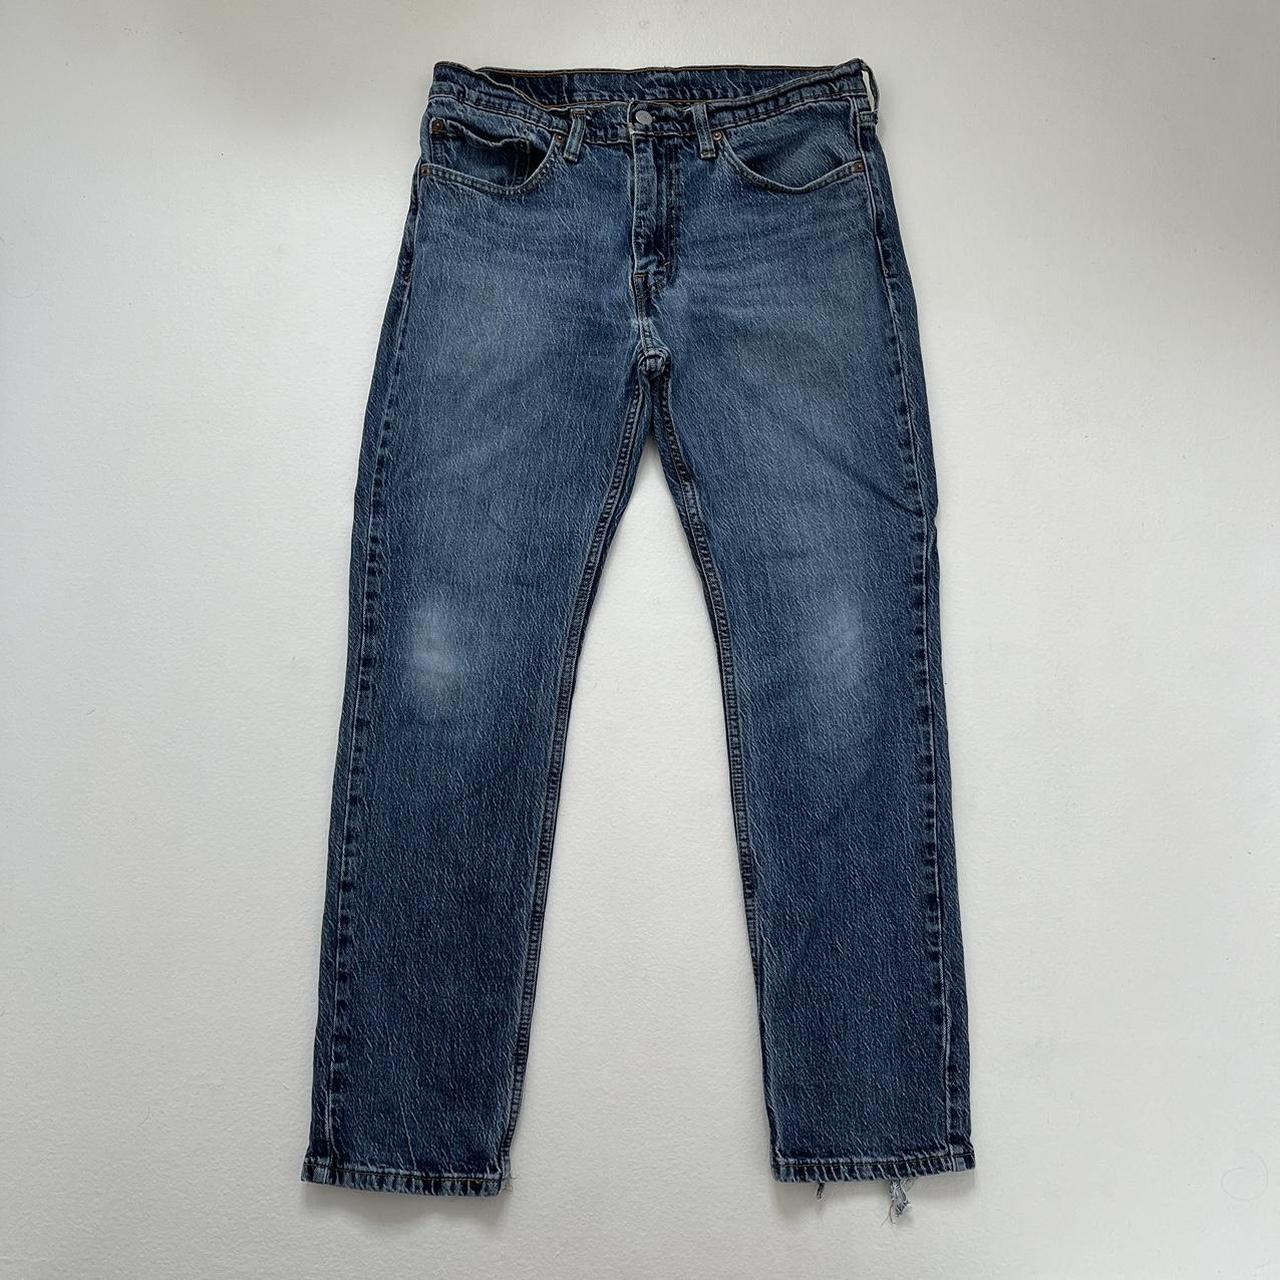 Vintage Levis 511 jeans - W34 Vintage dark wash... - Depop